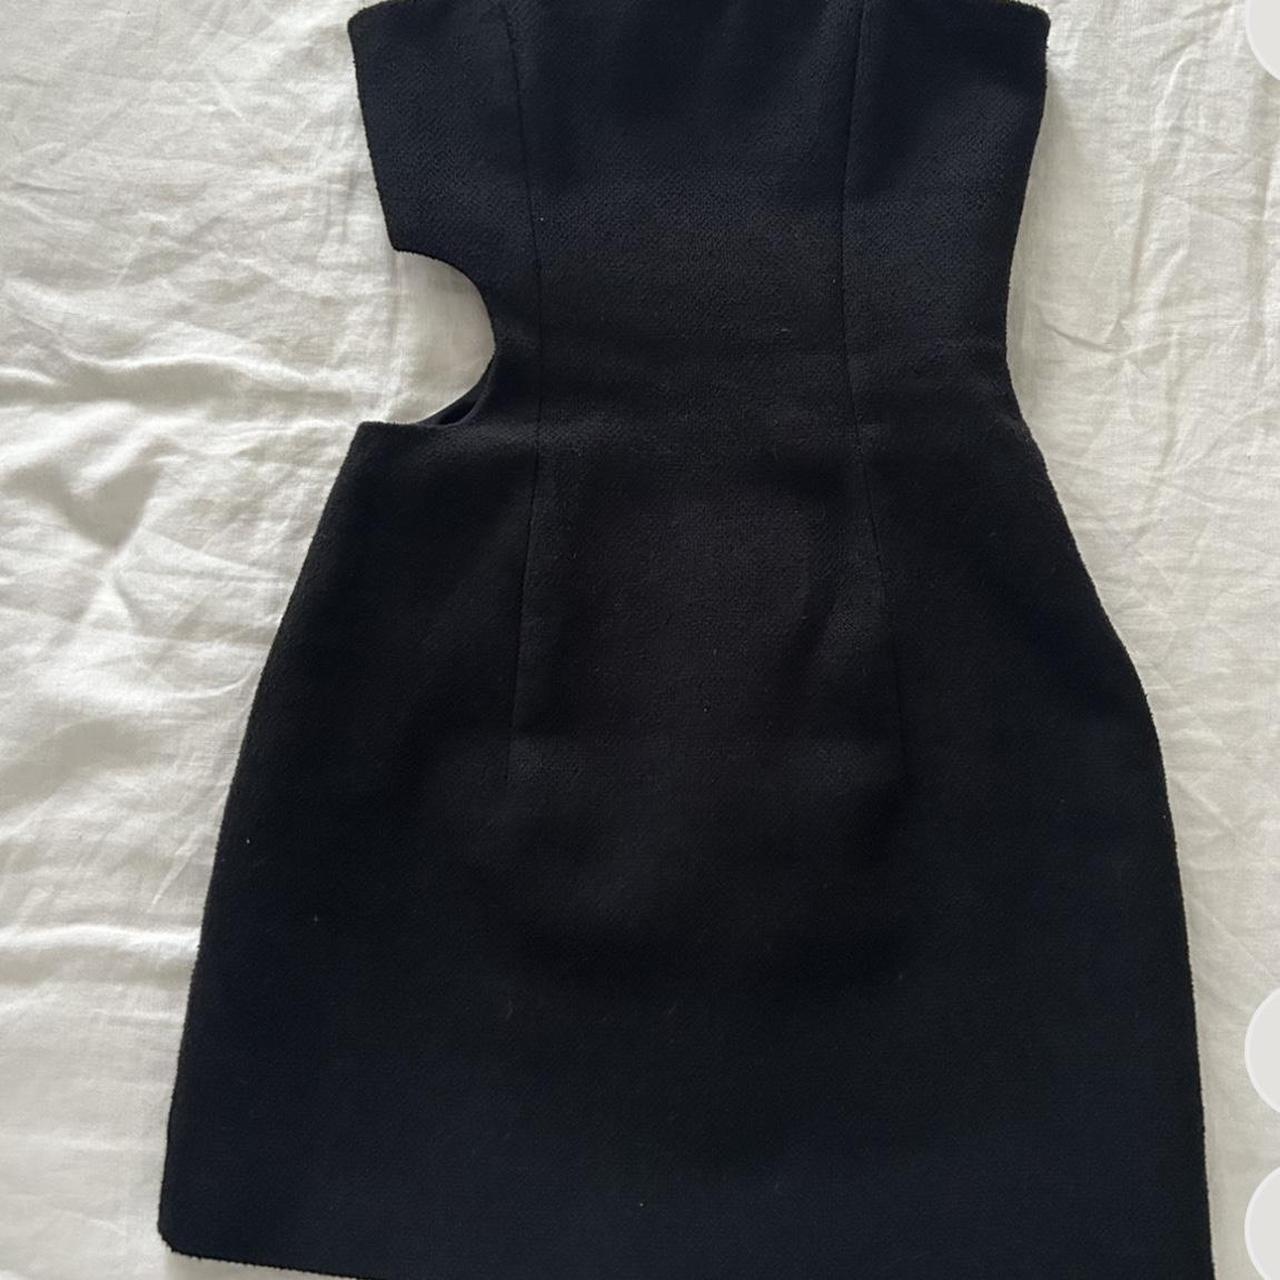 SIR THE LABEL black strapless mini dress size 0 in... - Depop